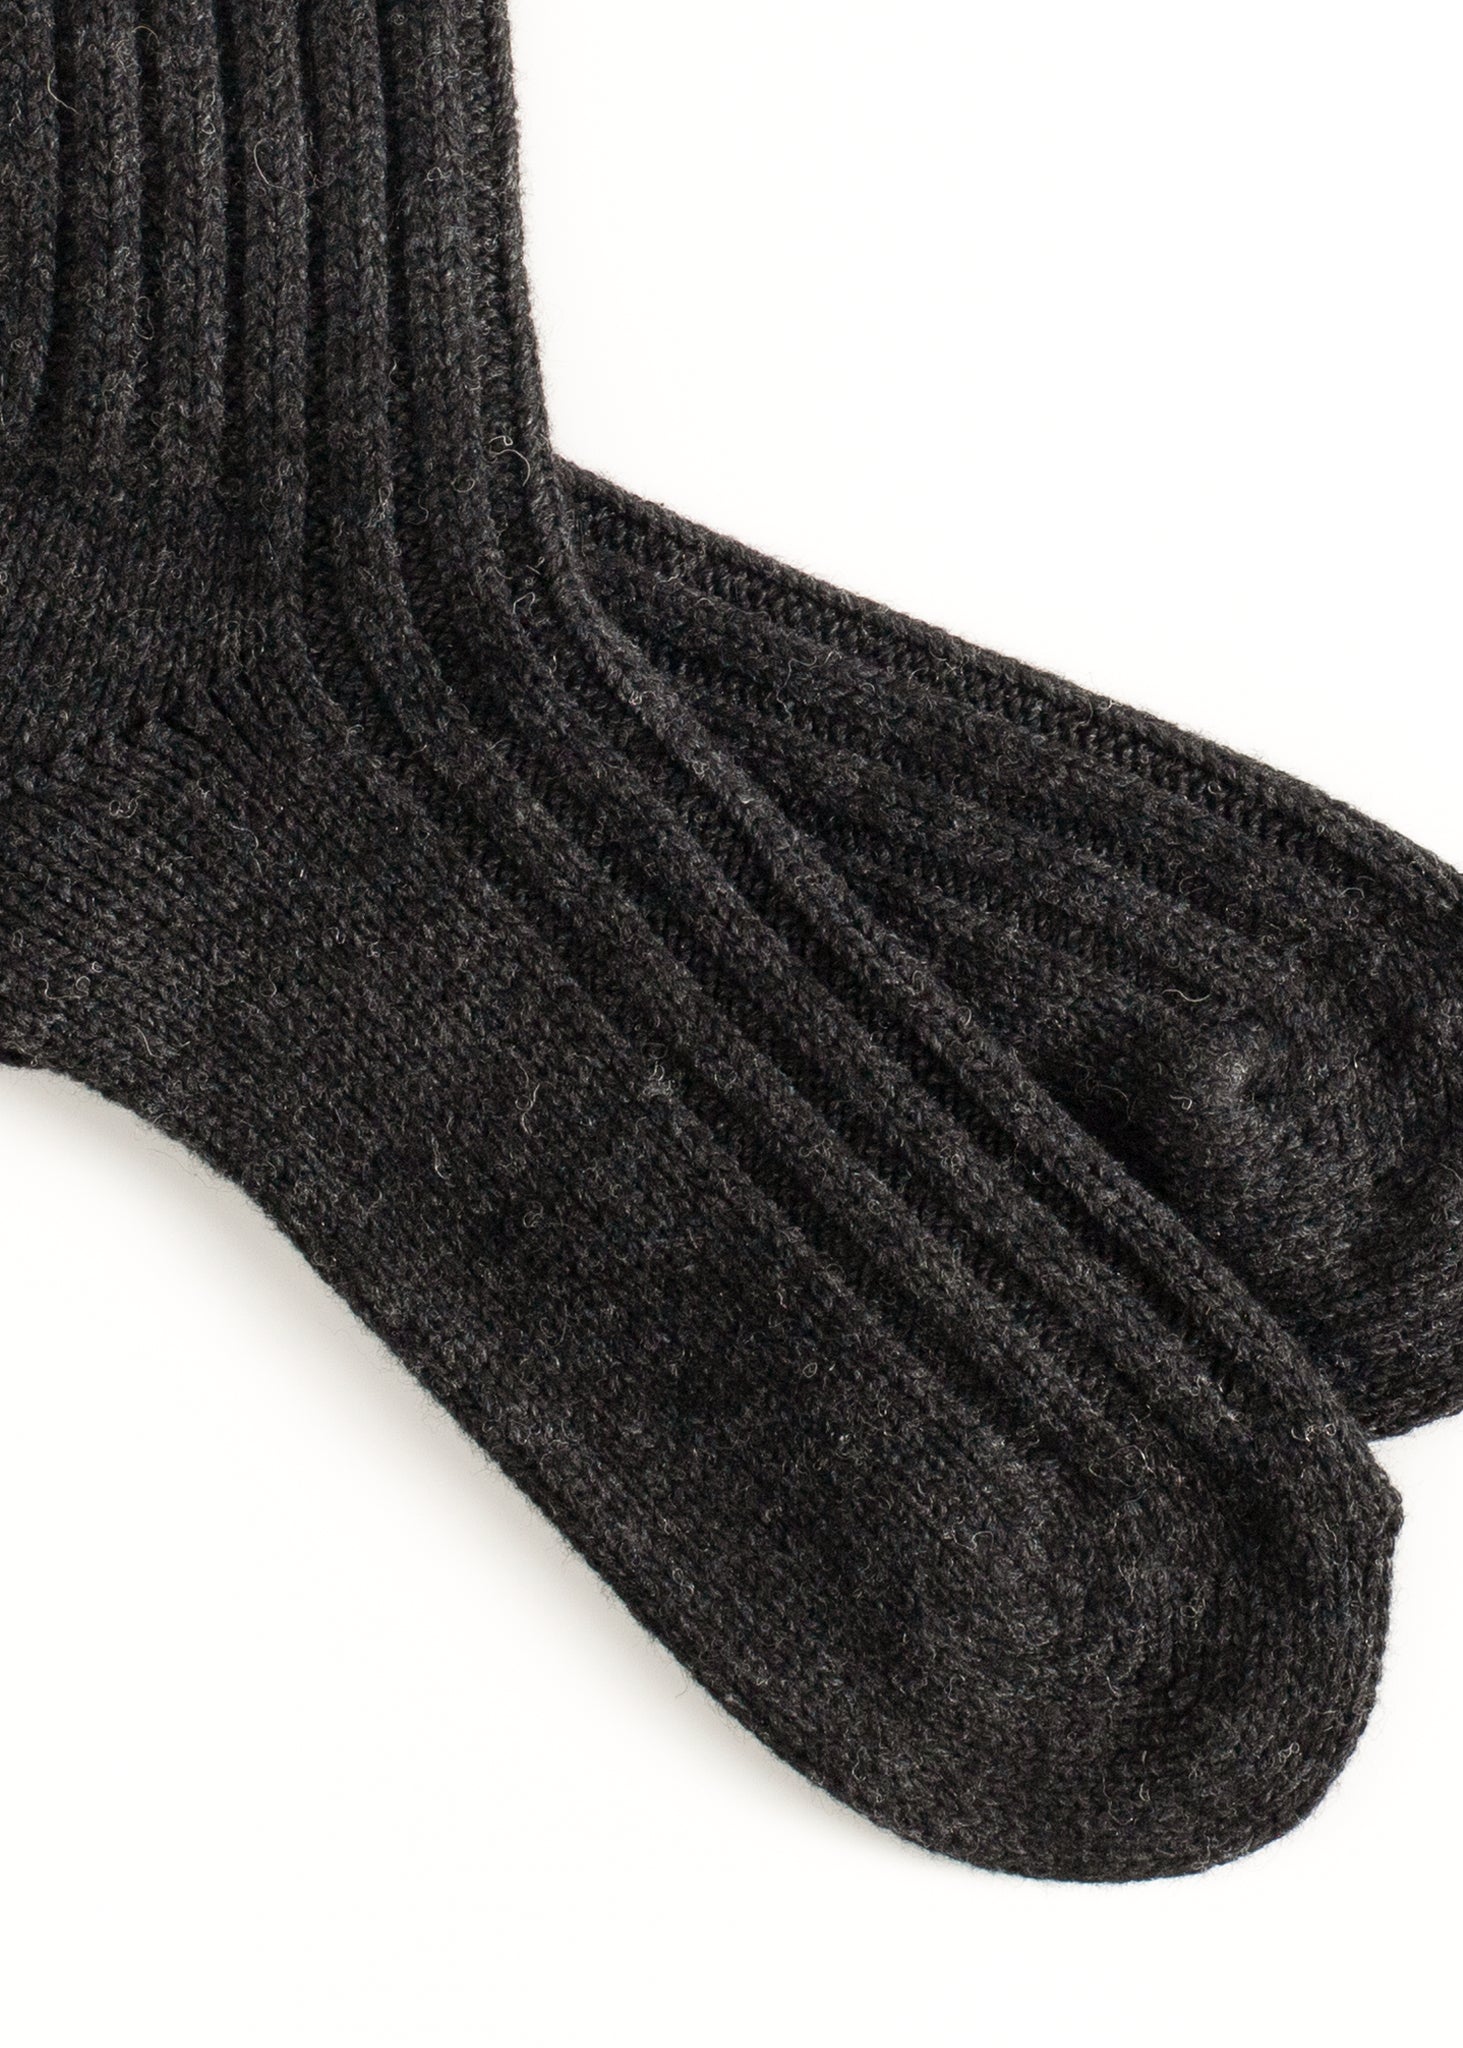 Thunders Love Wool Solid Dark Grey Socks